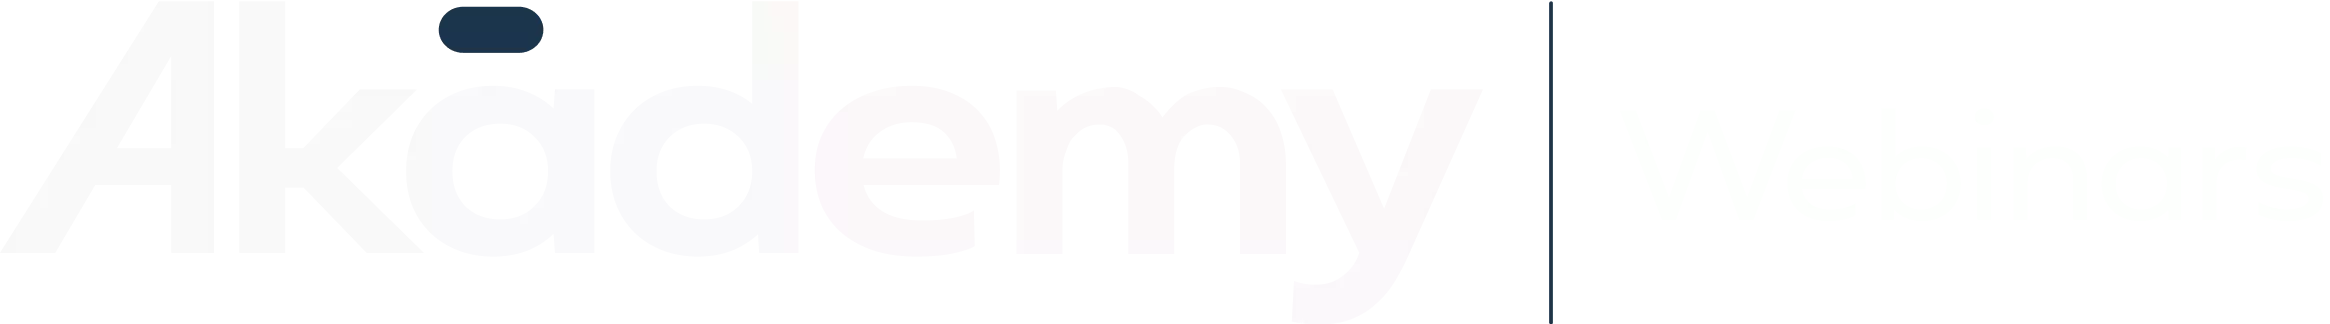 Logo - Akádemy | Webinars